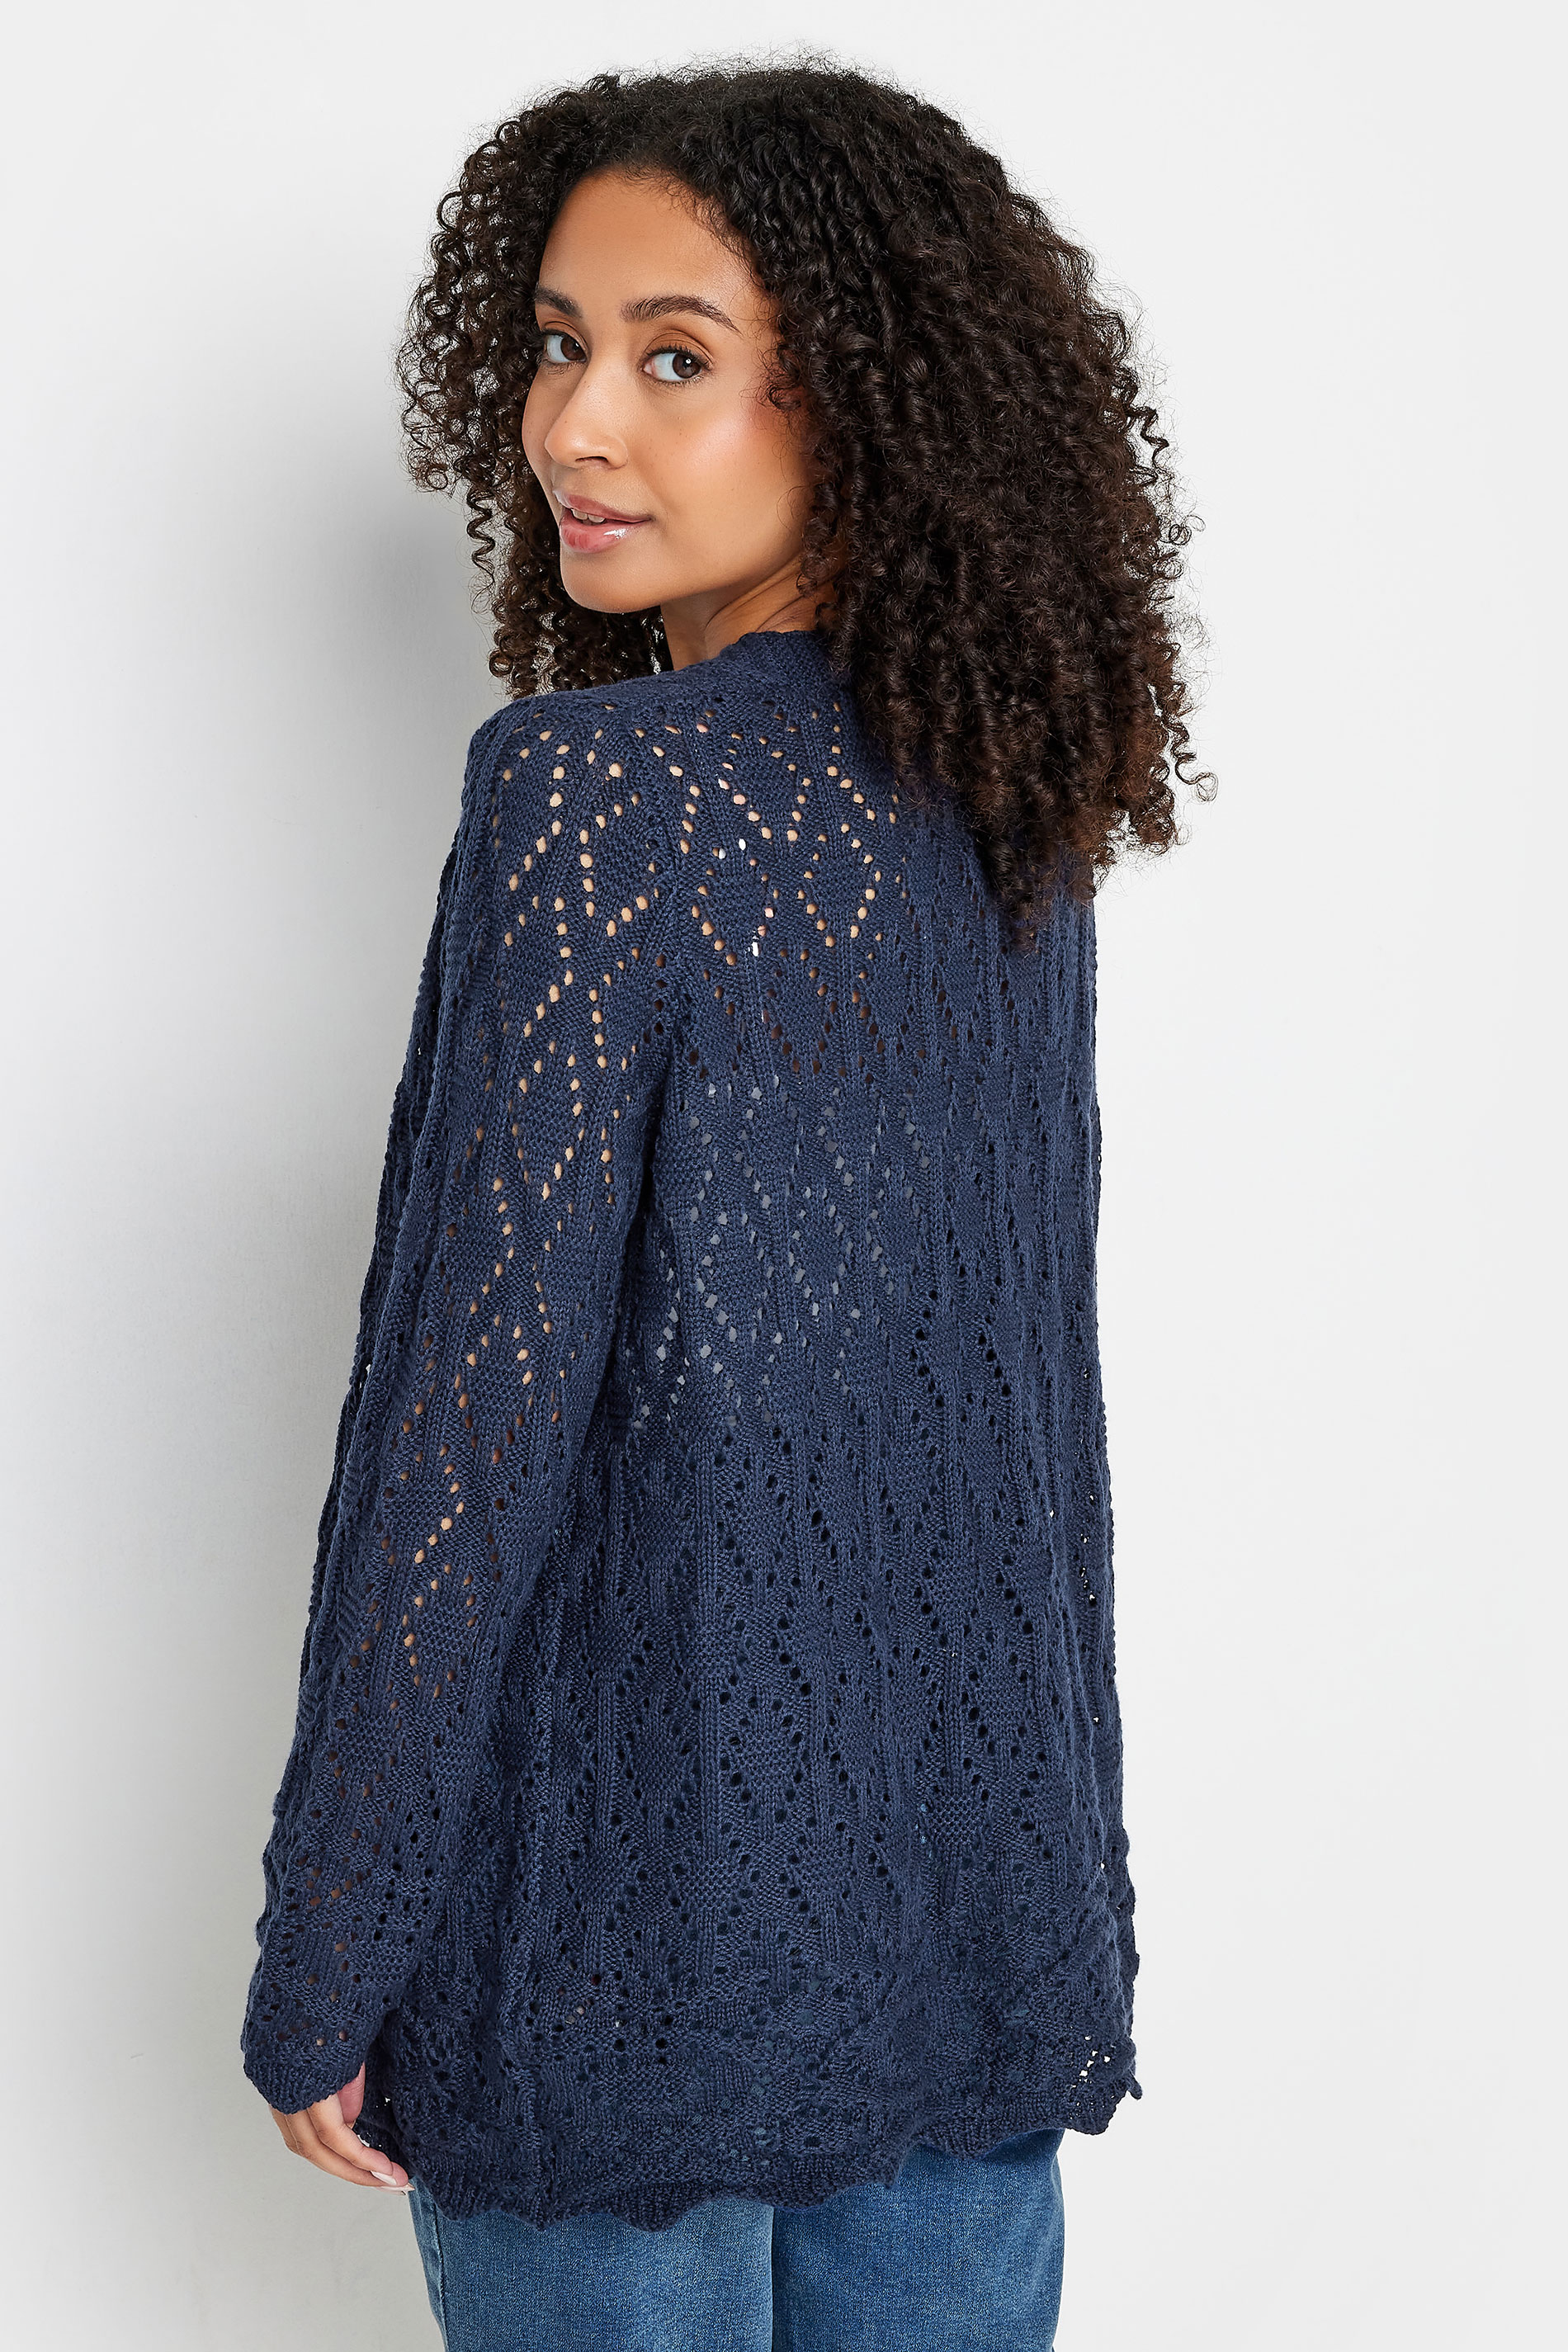 M&Co Petite Navy Blue Crochet Cardigan | M&Co 3